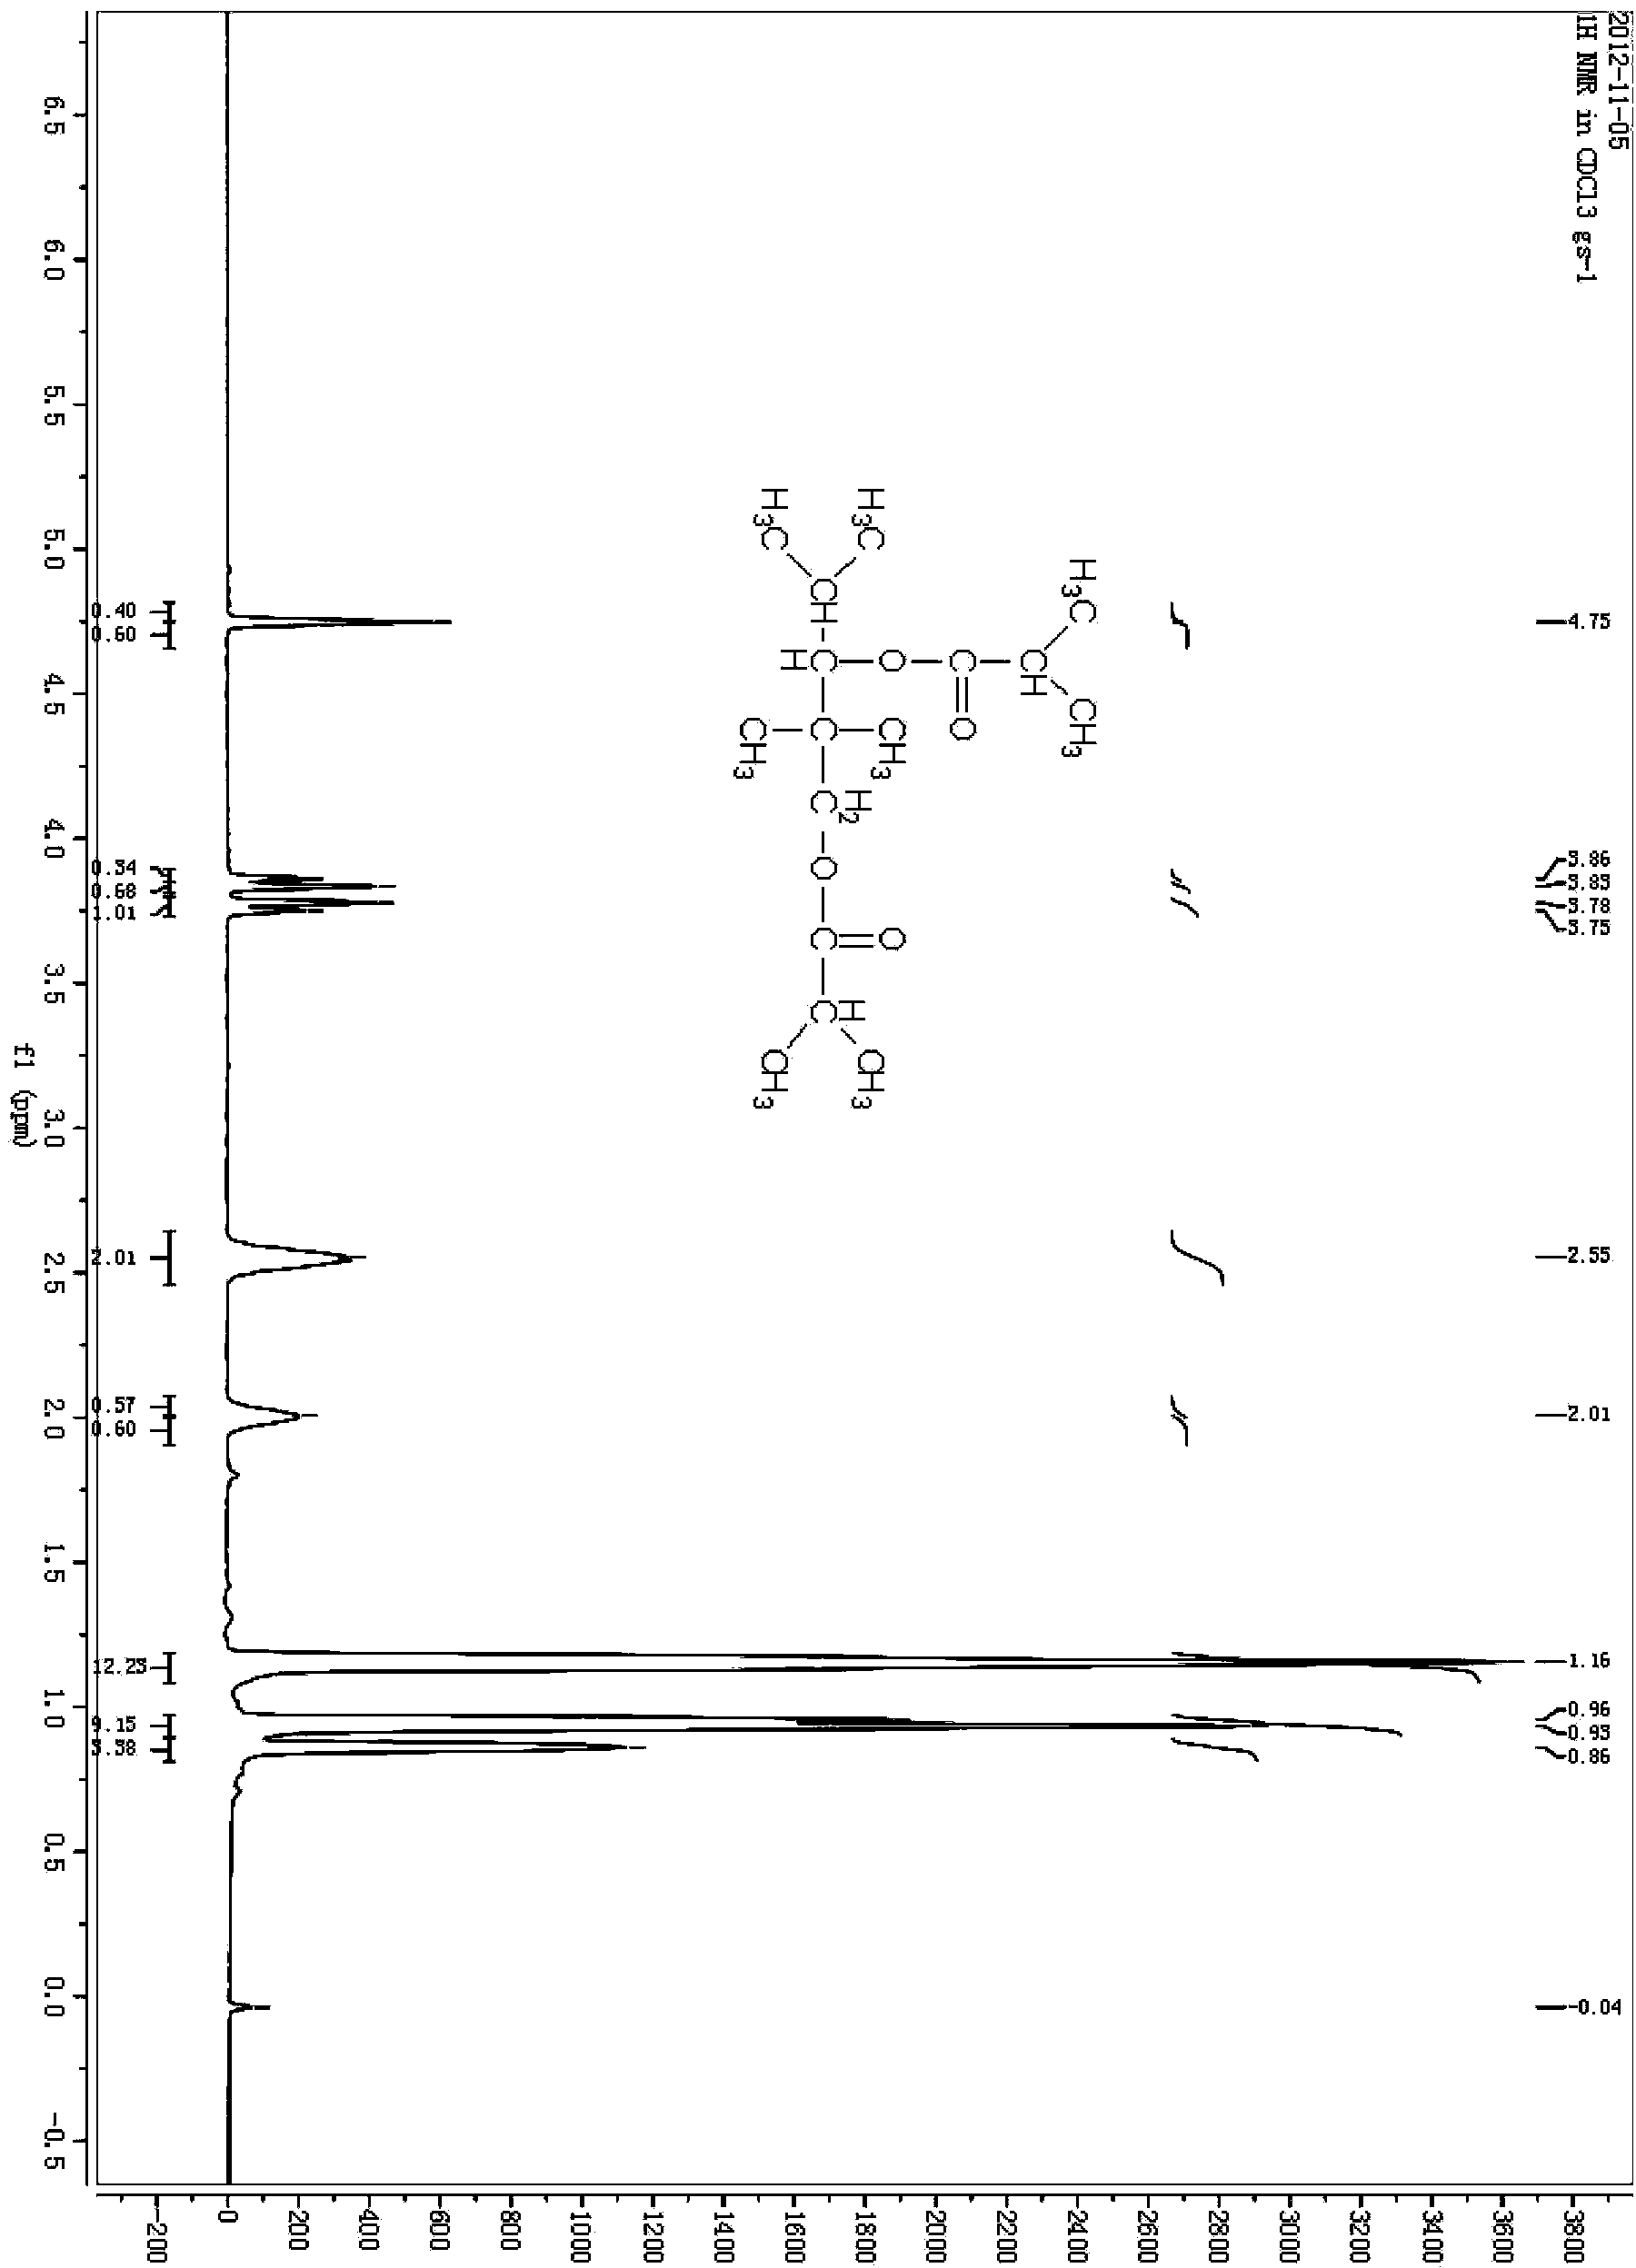 Method for preparing 2,2,4-trimethyl-1,3-pentanediol diisobutyrate